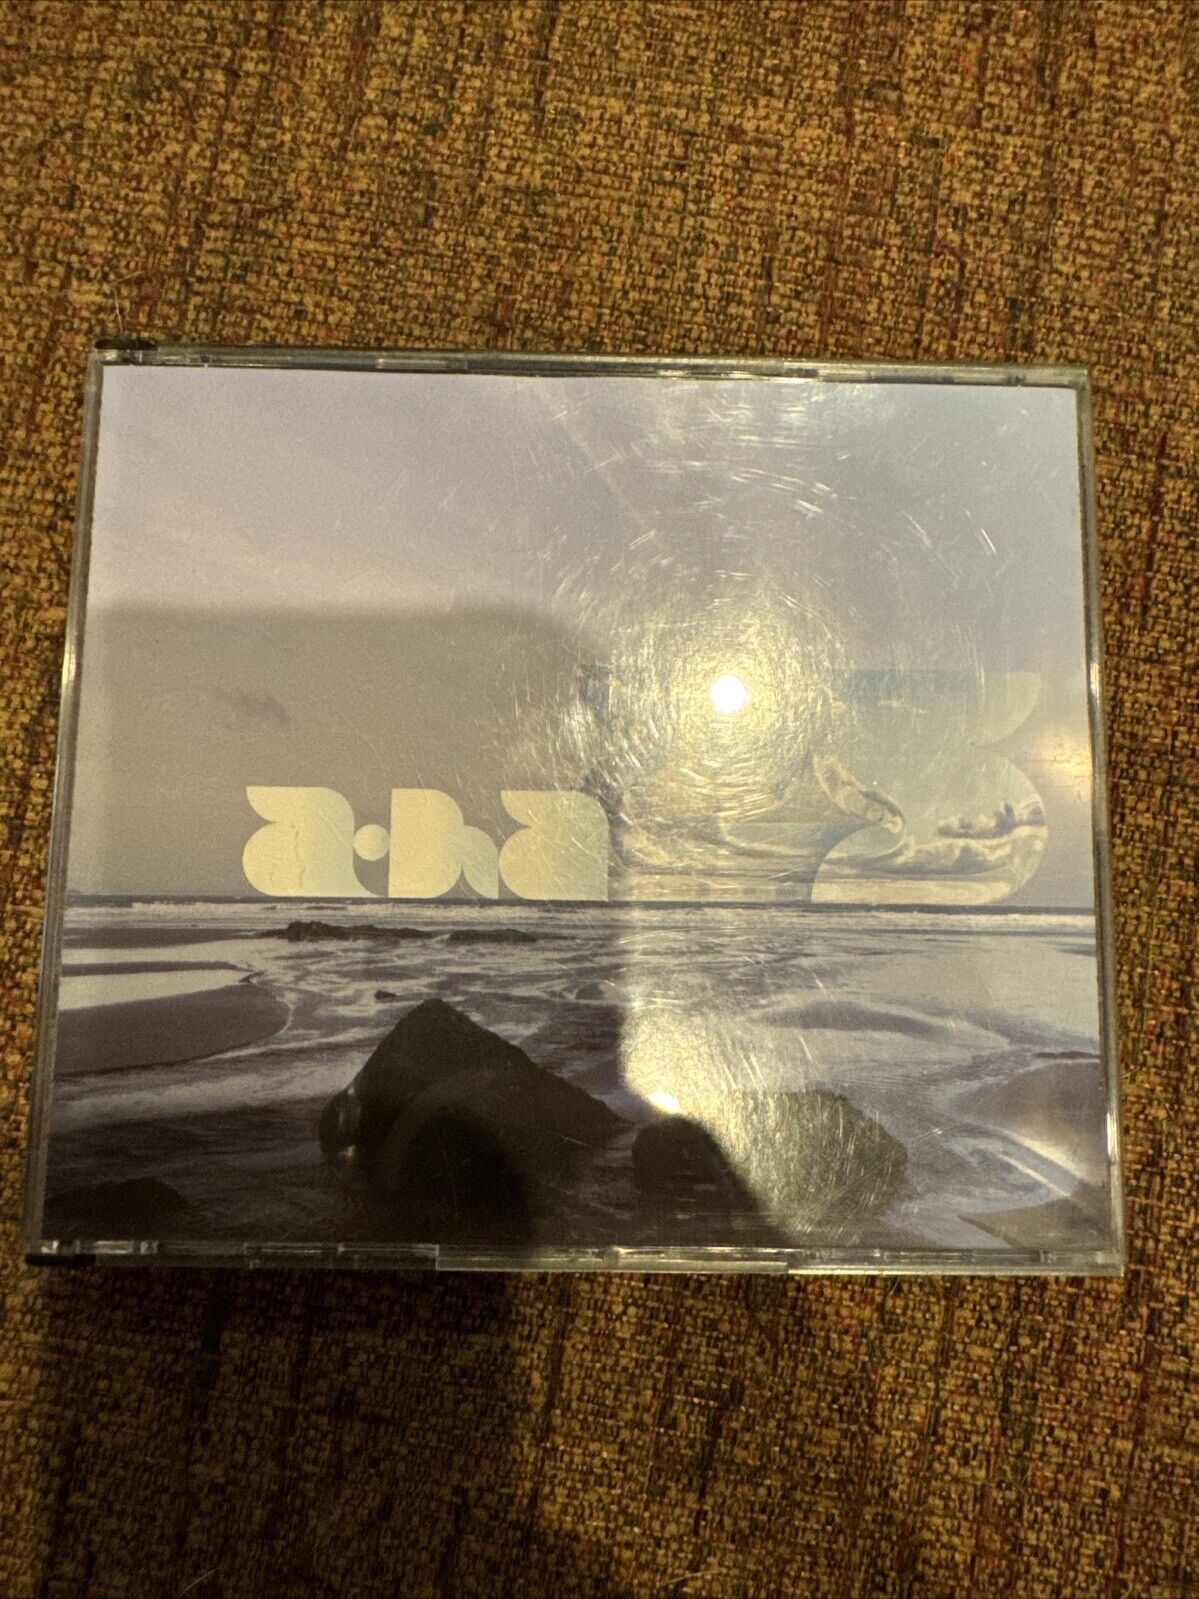 25: Very Best Of a-ha [Bonus DVD] by a-ha (CD, 2010, 3 Discs) Preowned